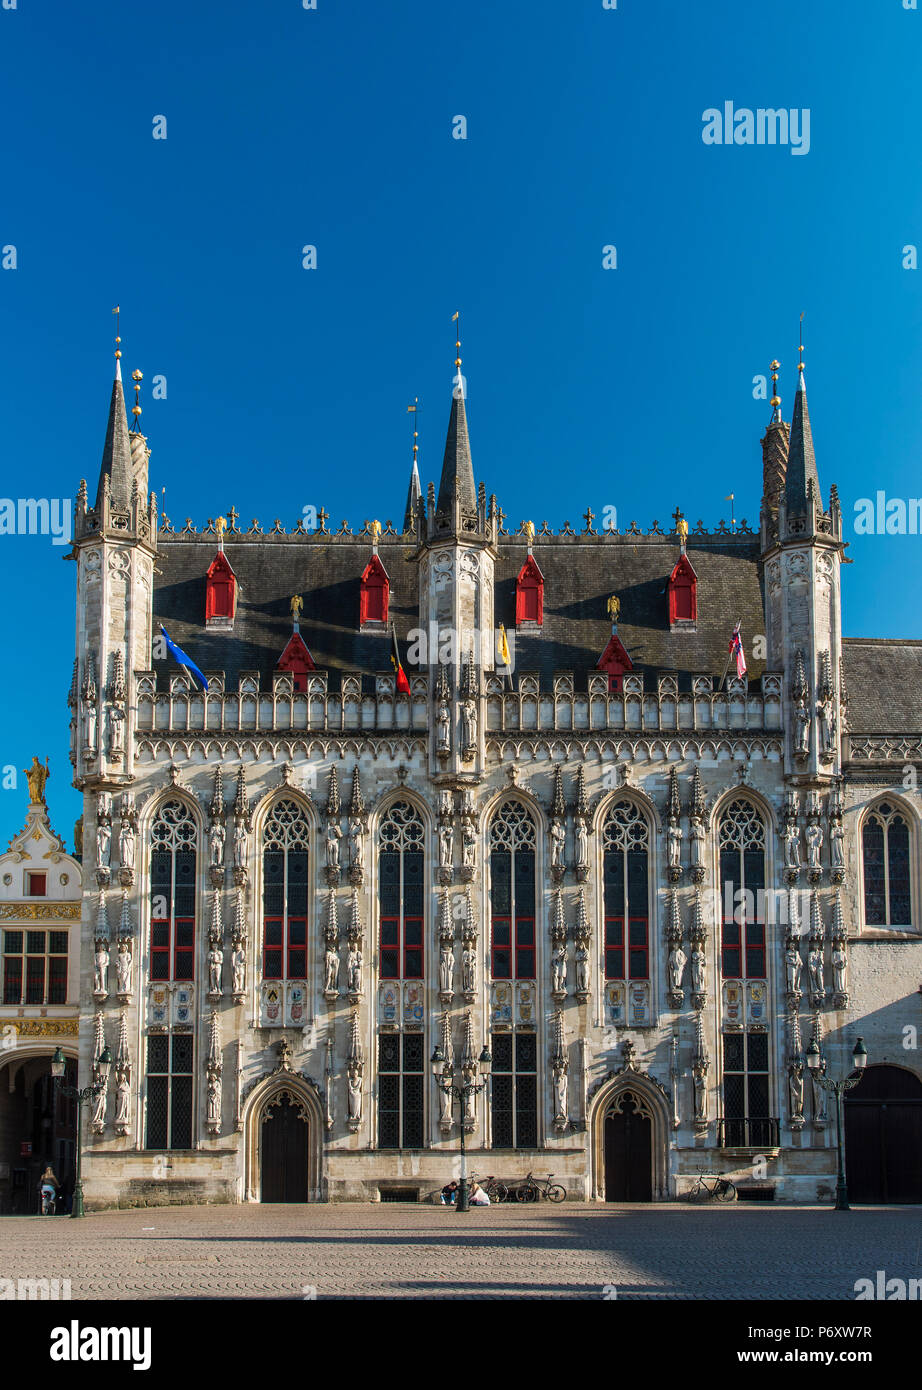 Stadhuis ou l'Hôtel de Ville, Bruges, Flandre occidentale, Belgique Banque D'Images